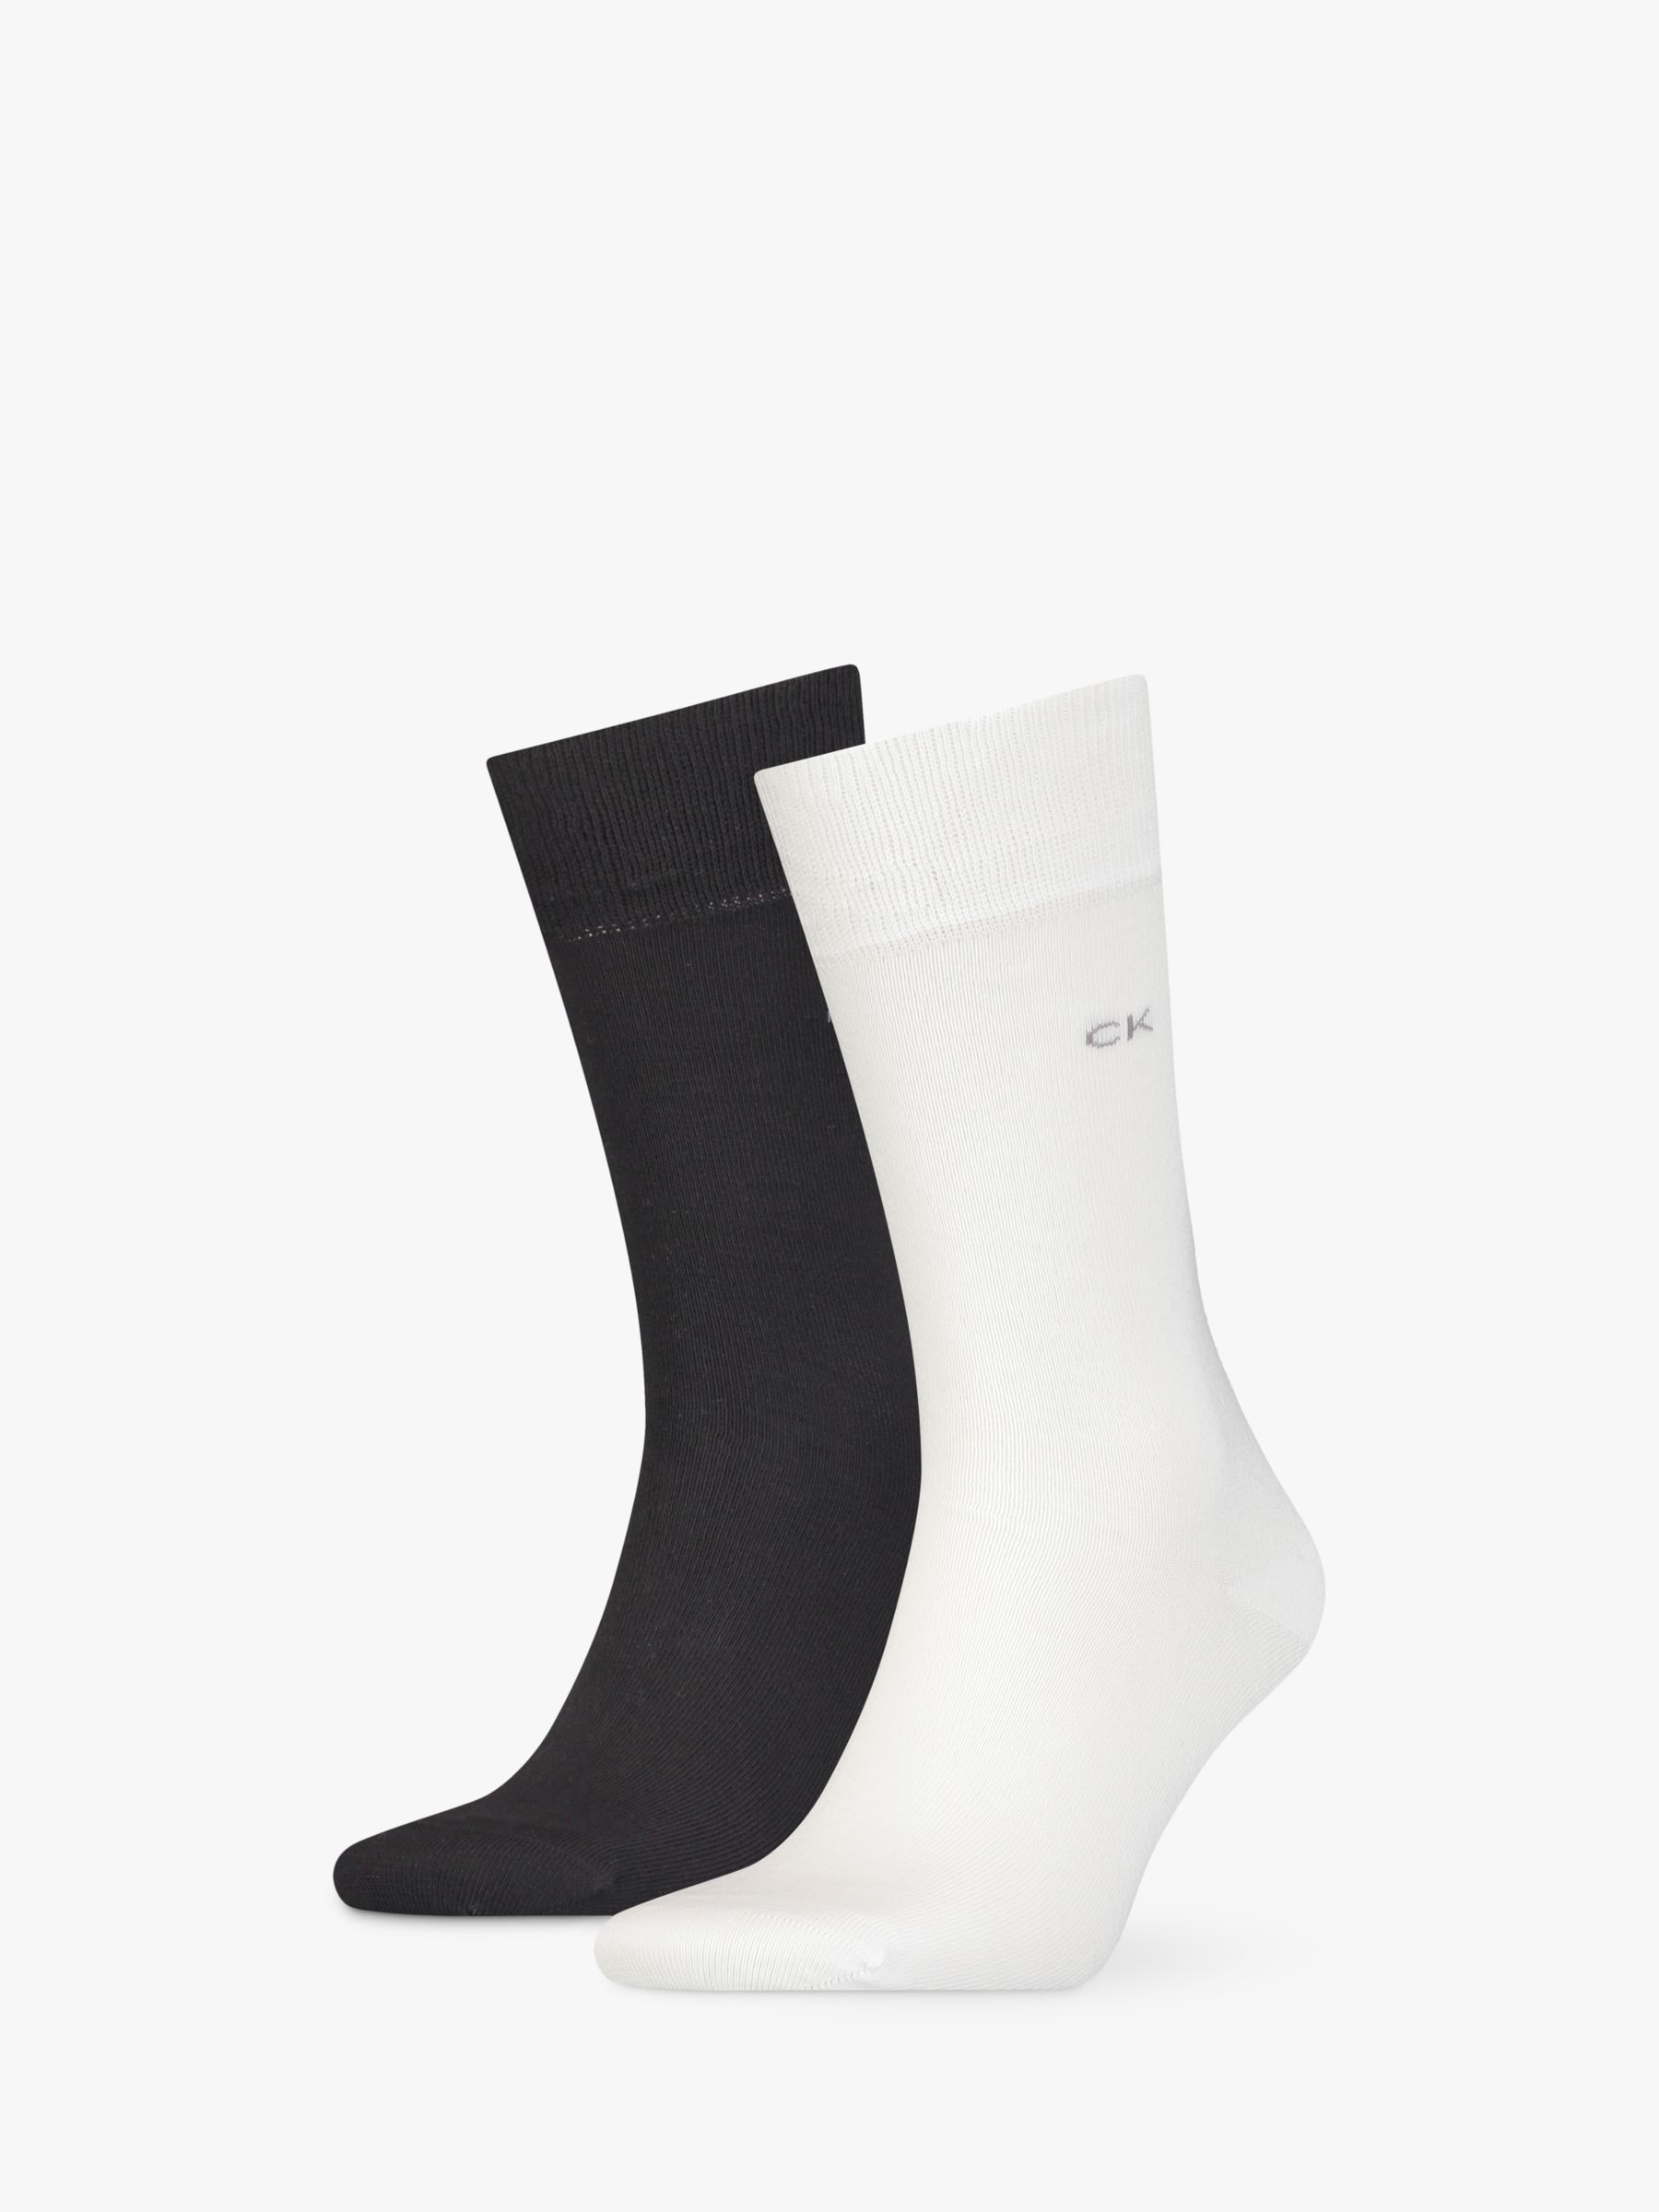 Calvin Klein Flat Knit Cotton Socks, Pack of 2, Black/White at John Lewis &  Partners